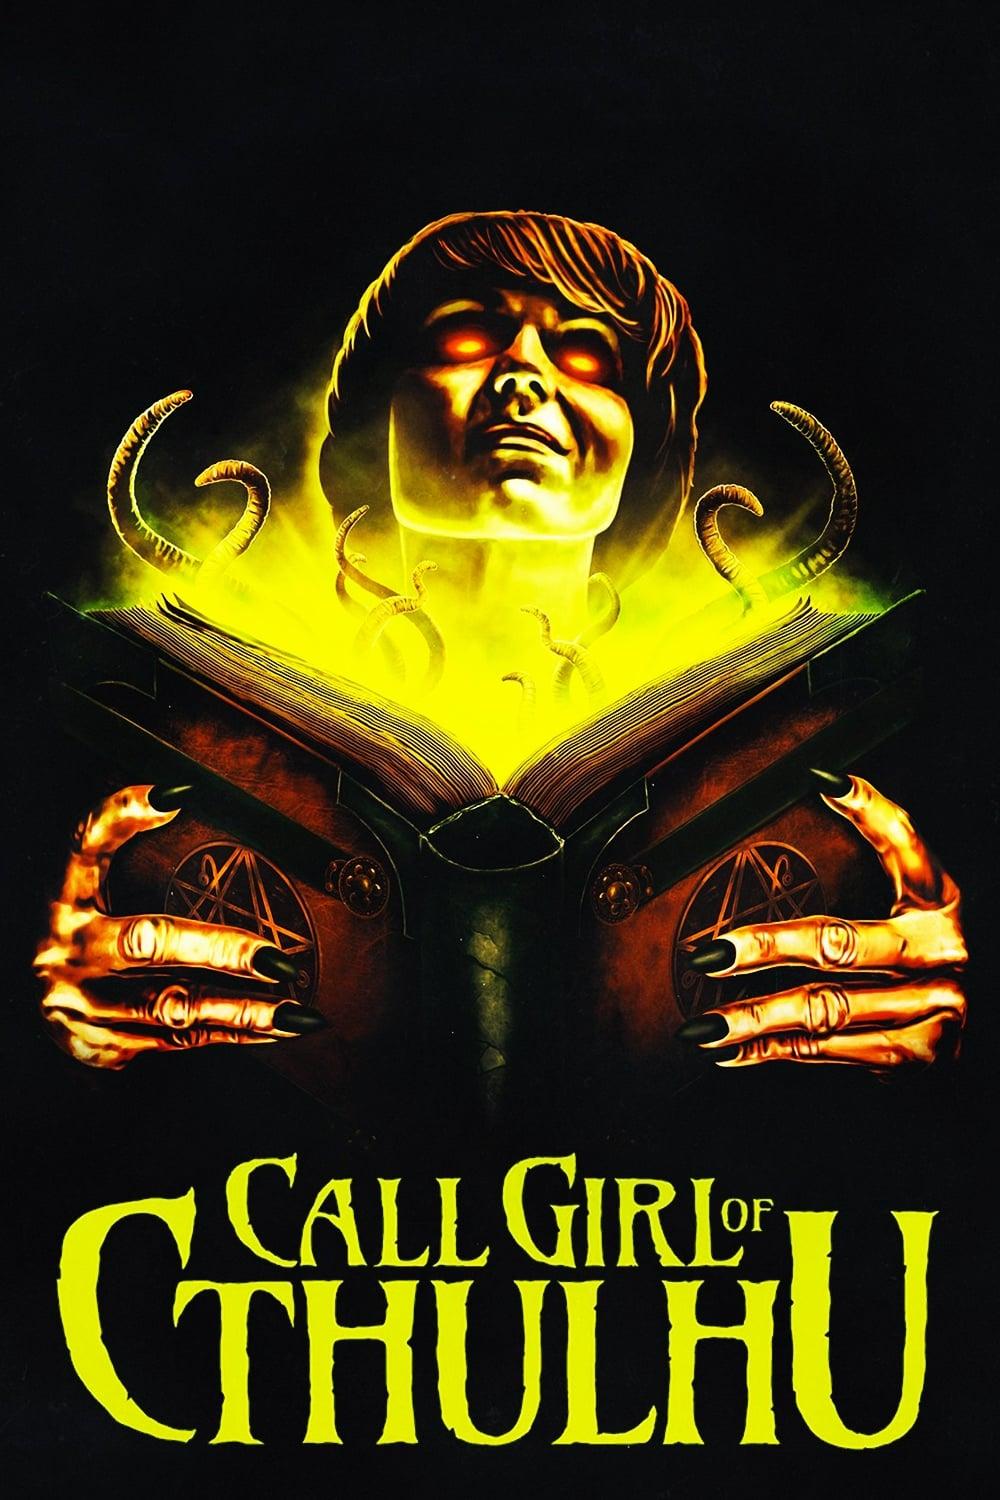 Call Girl of Cthulhu poster